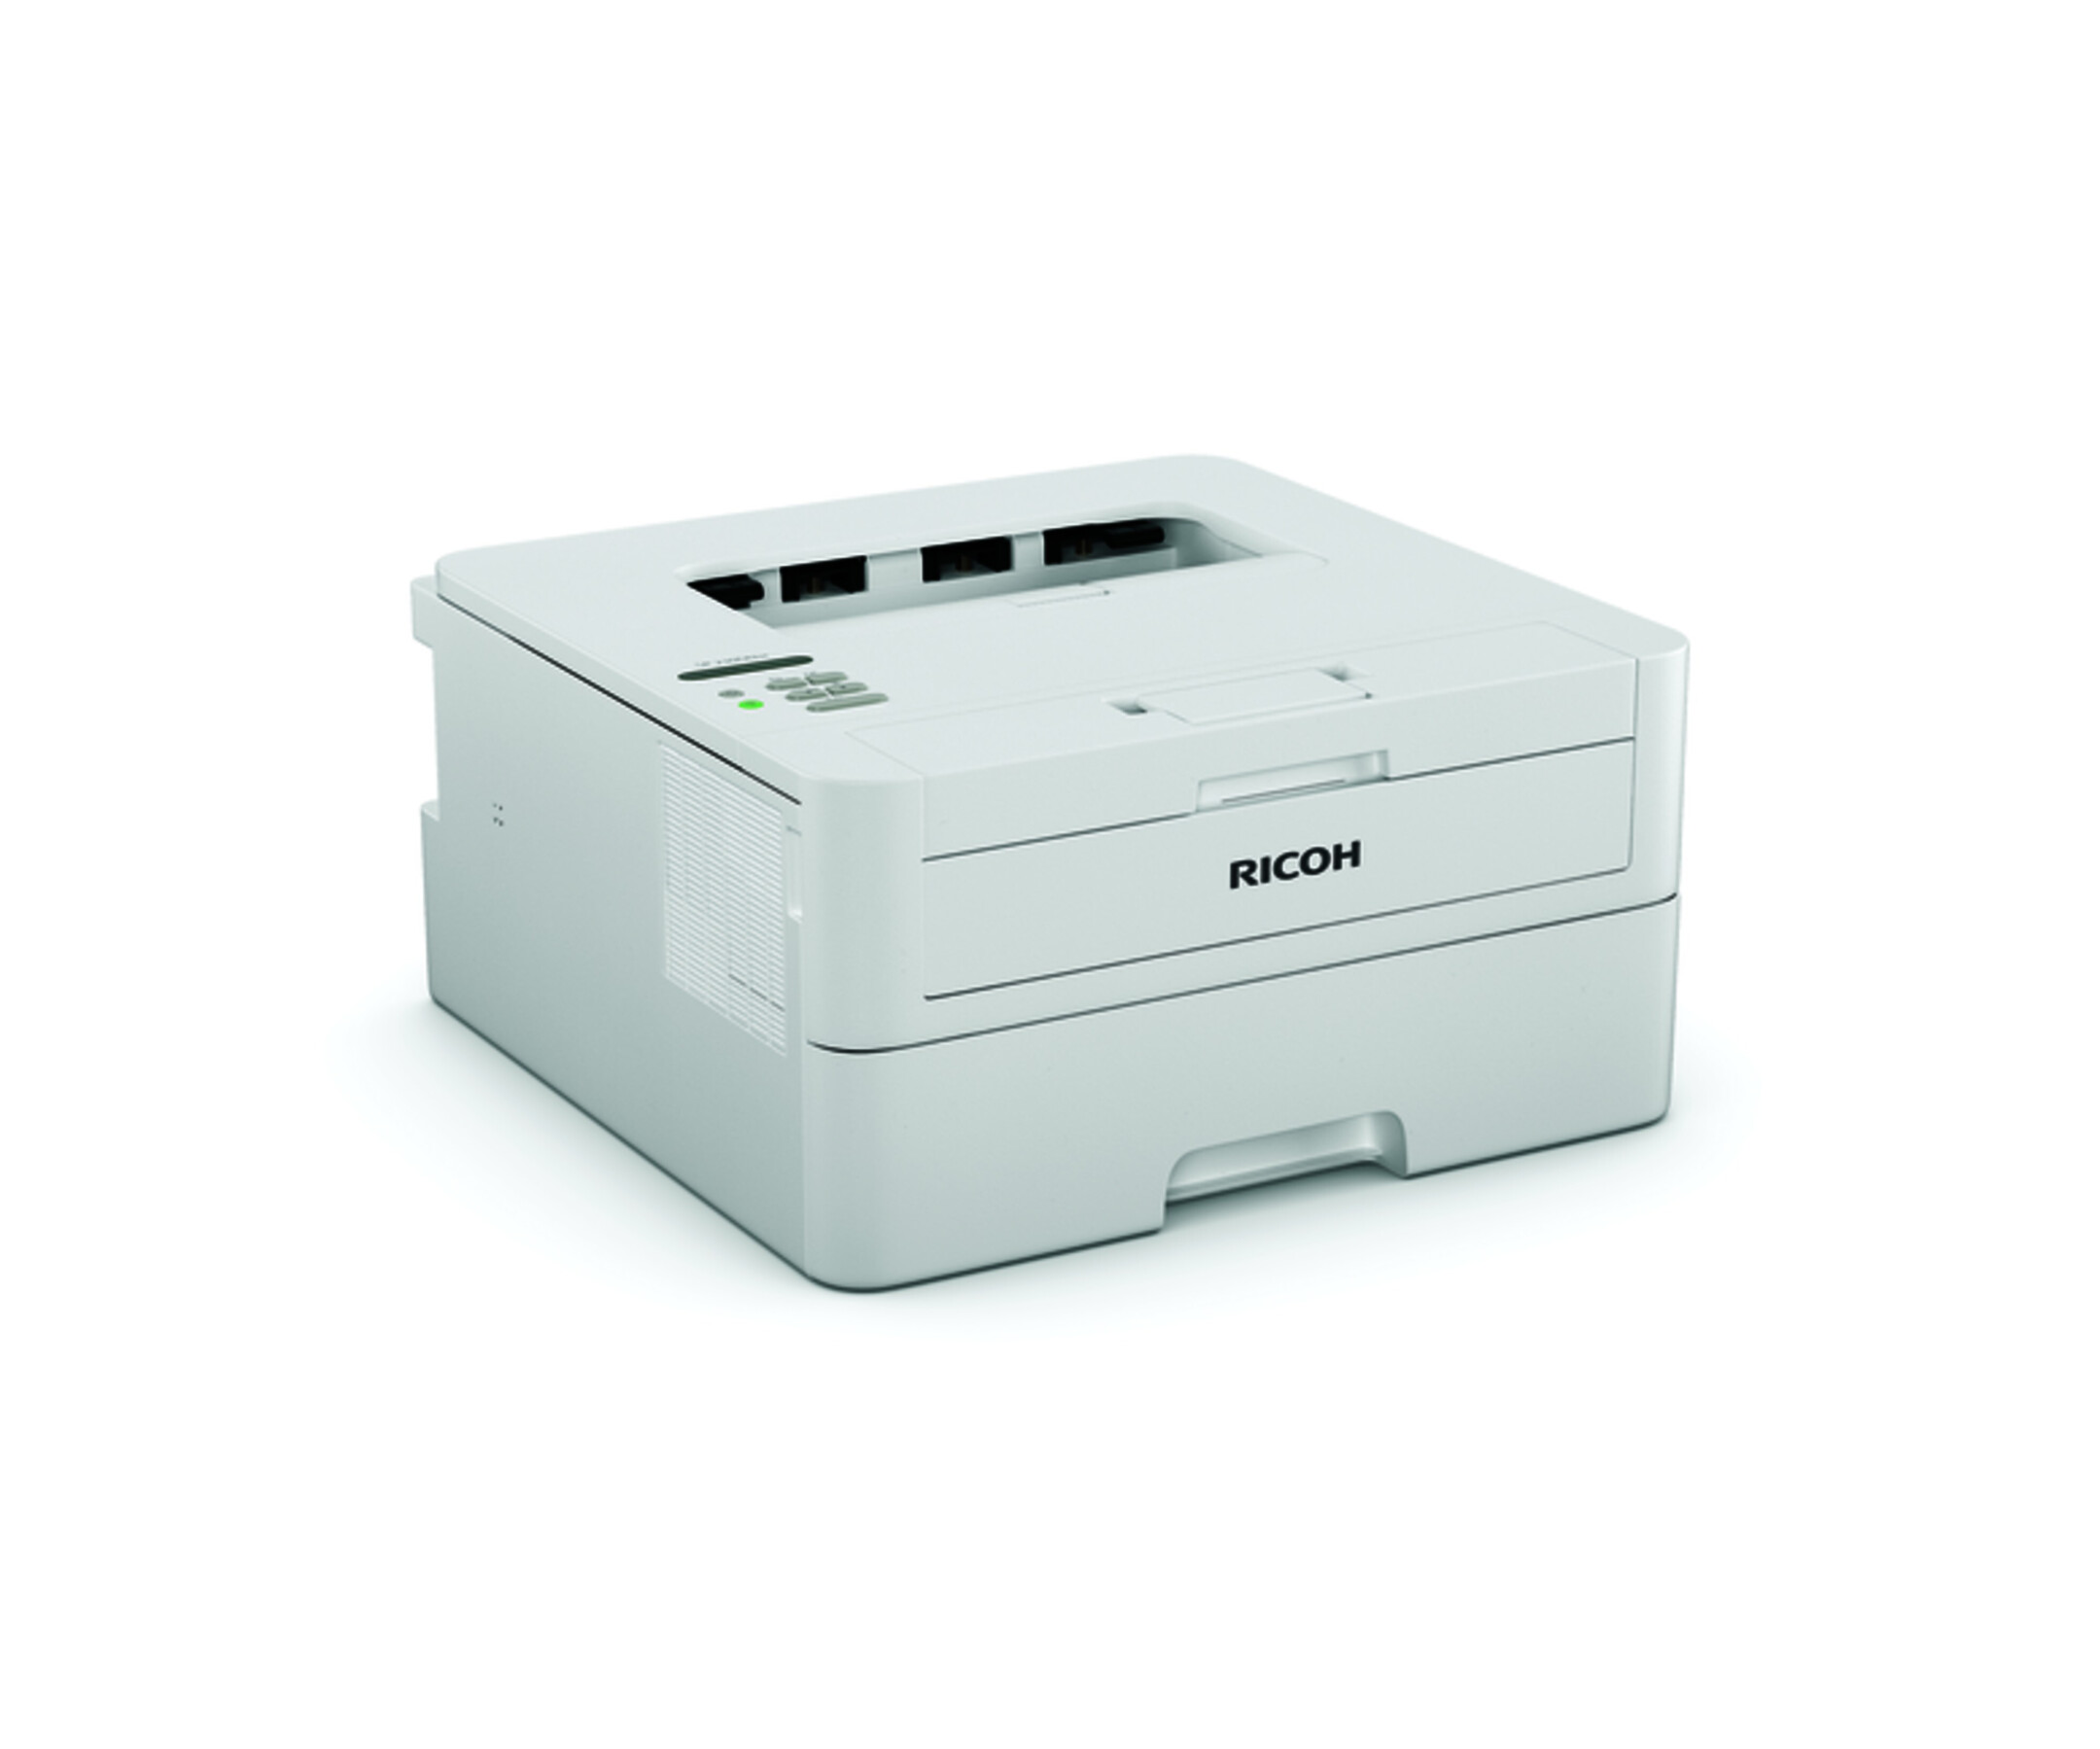 Ricoh-SP-230DNw-Printer